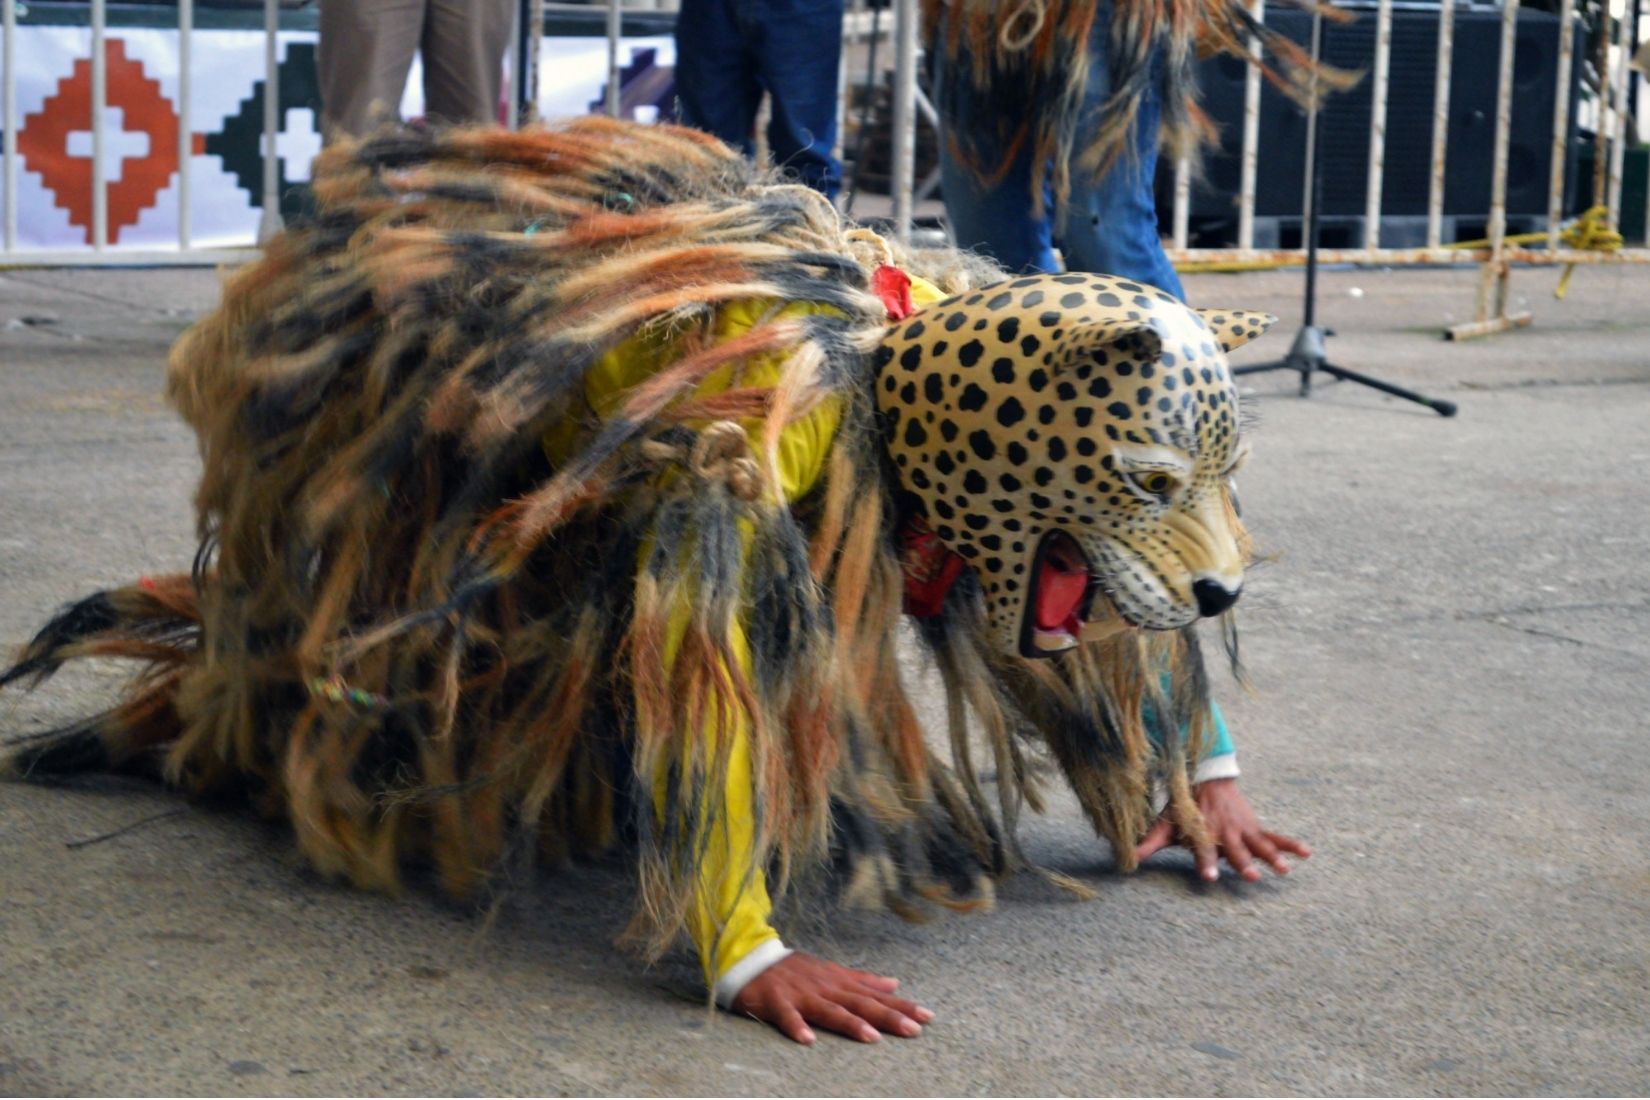 Indumentaria para la Danza del Tigre o Jaguar, zoques de Tuxtla Gutiérrez, Chis. D.R. Sergio Luis Contreras, 2014, Fototeca Nacho López, INPI.